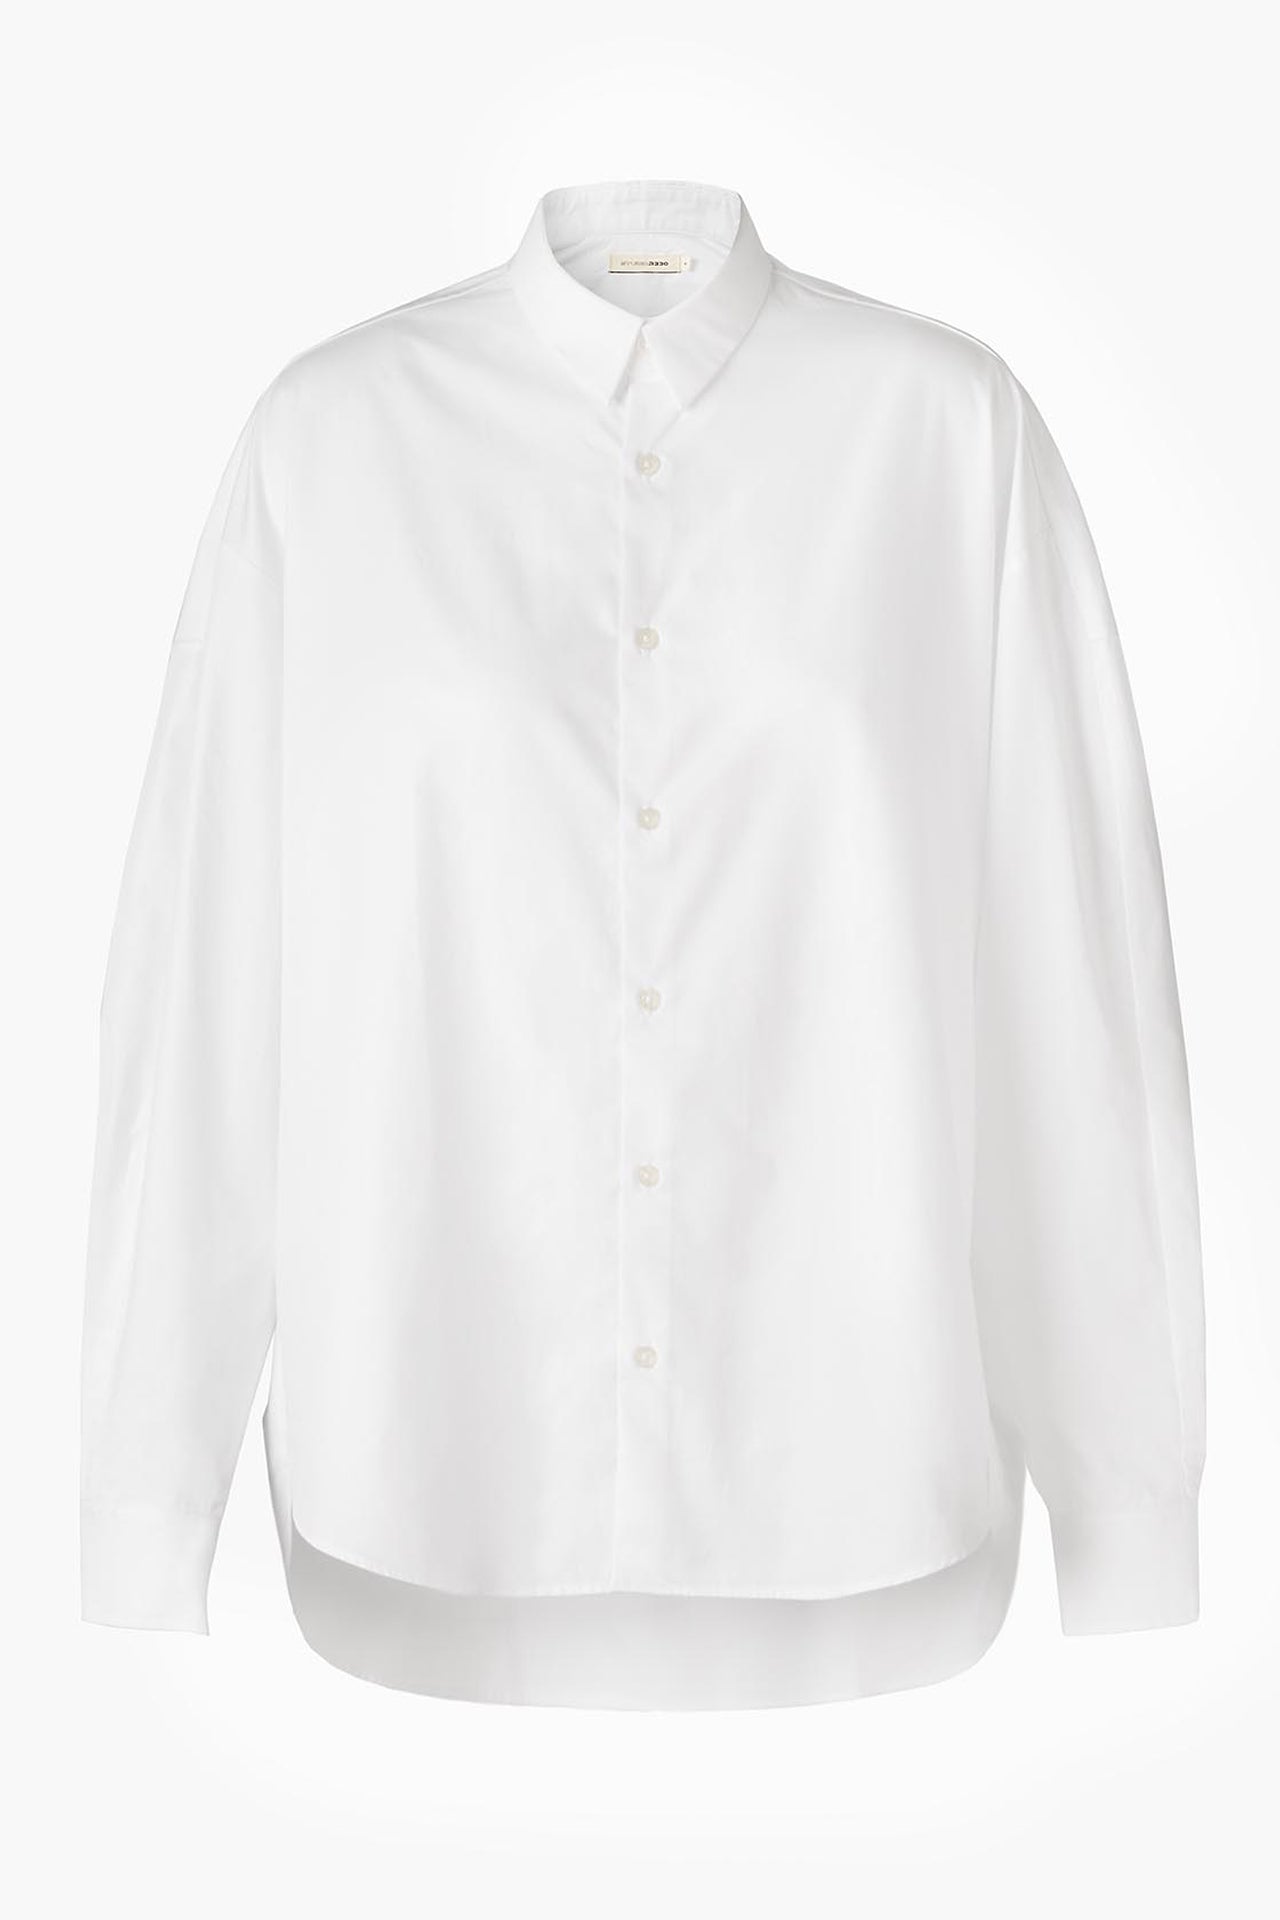 White Cotton Shirt - Boyfriend Fit